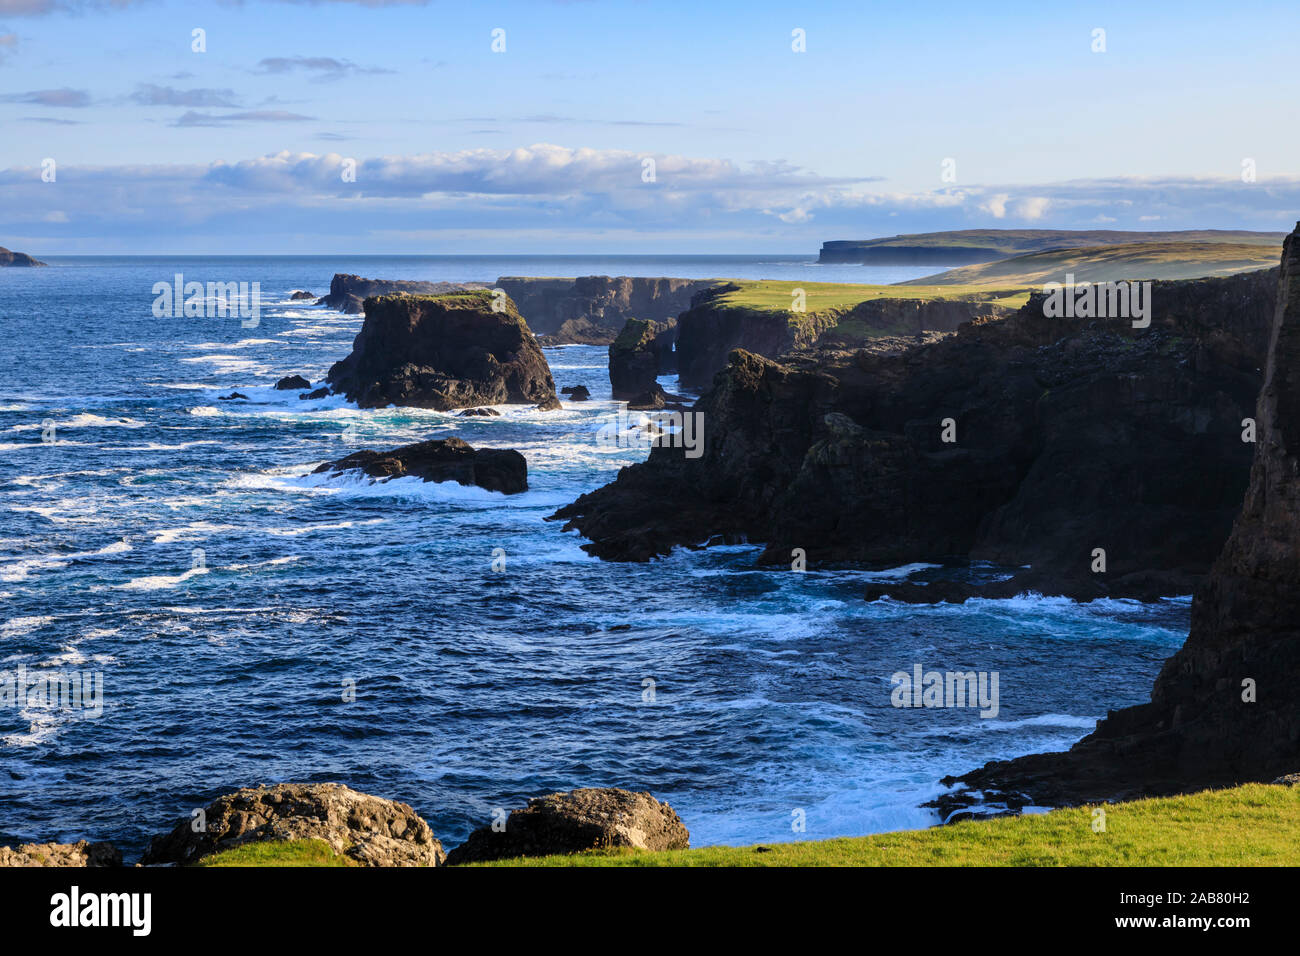 Eshaness, jagged cliffs, stacks, geos and blow holes, Northmavine, Mainland, Shetland Isles, Scotland, United Kingdom, Europe Stock Photo